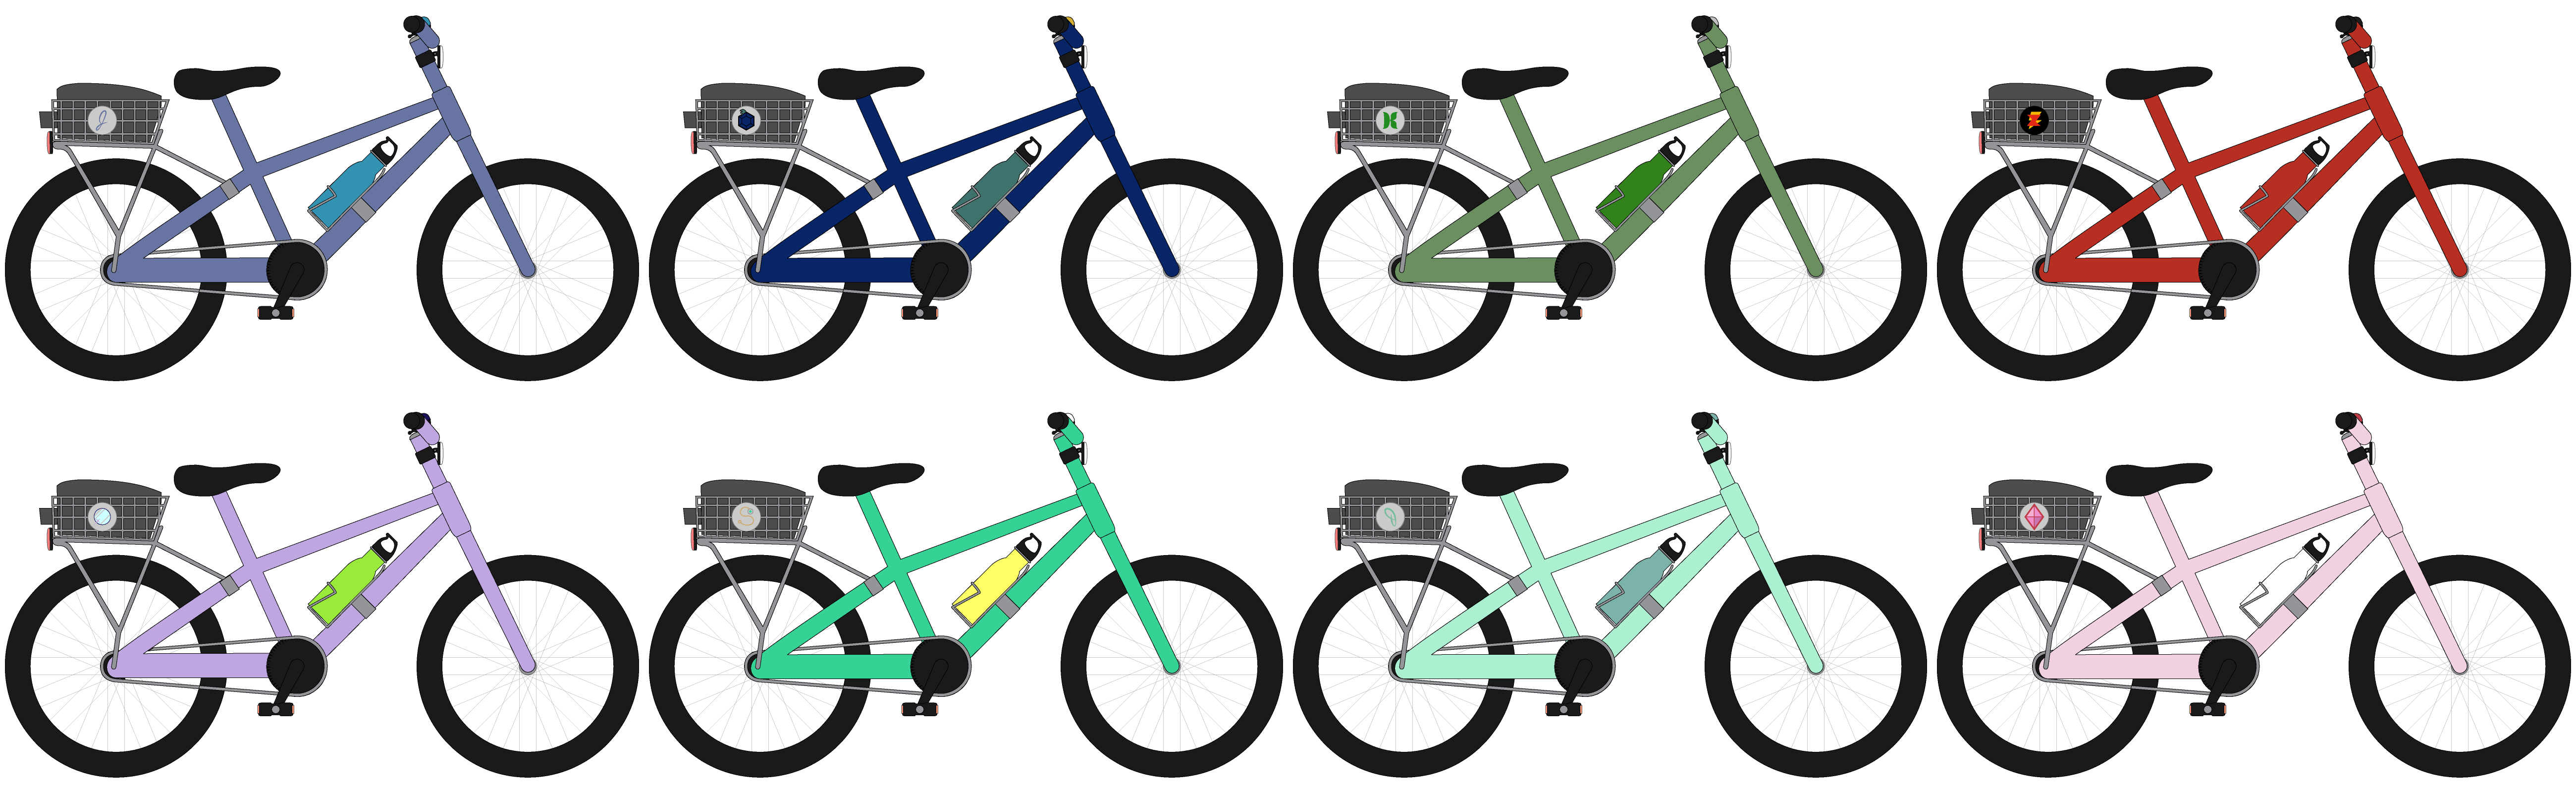 Bike-Frame-palette-swaps-ZJ-Bros-and-Co.png